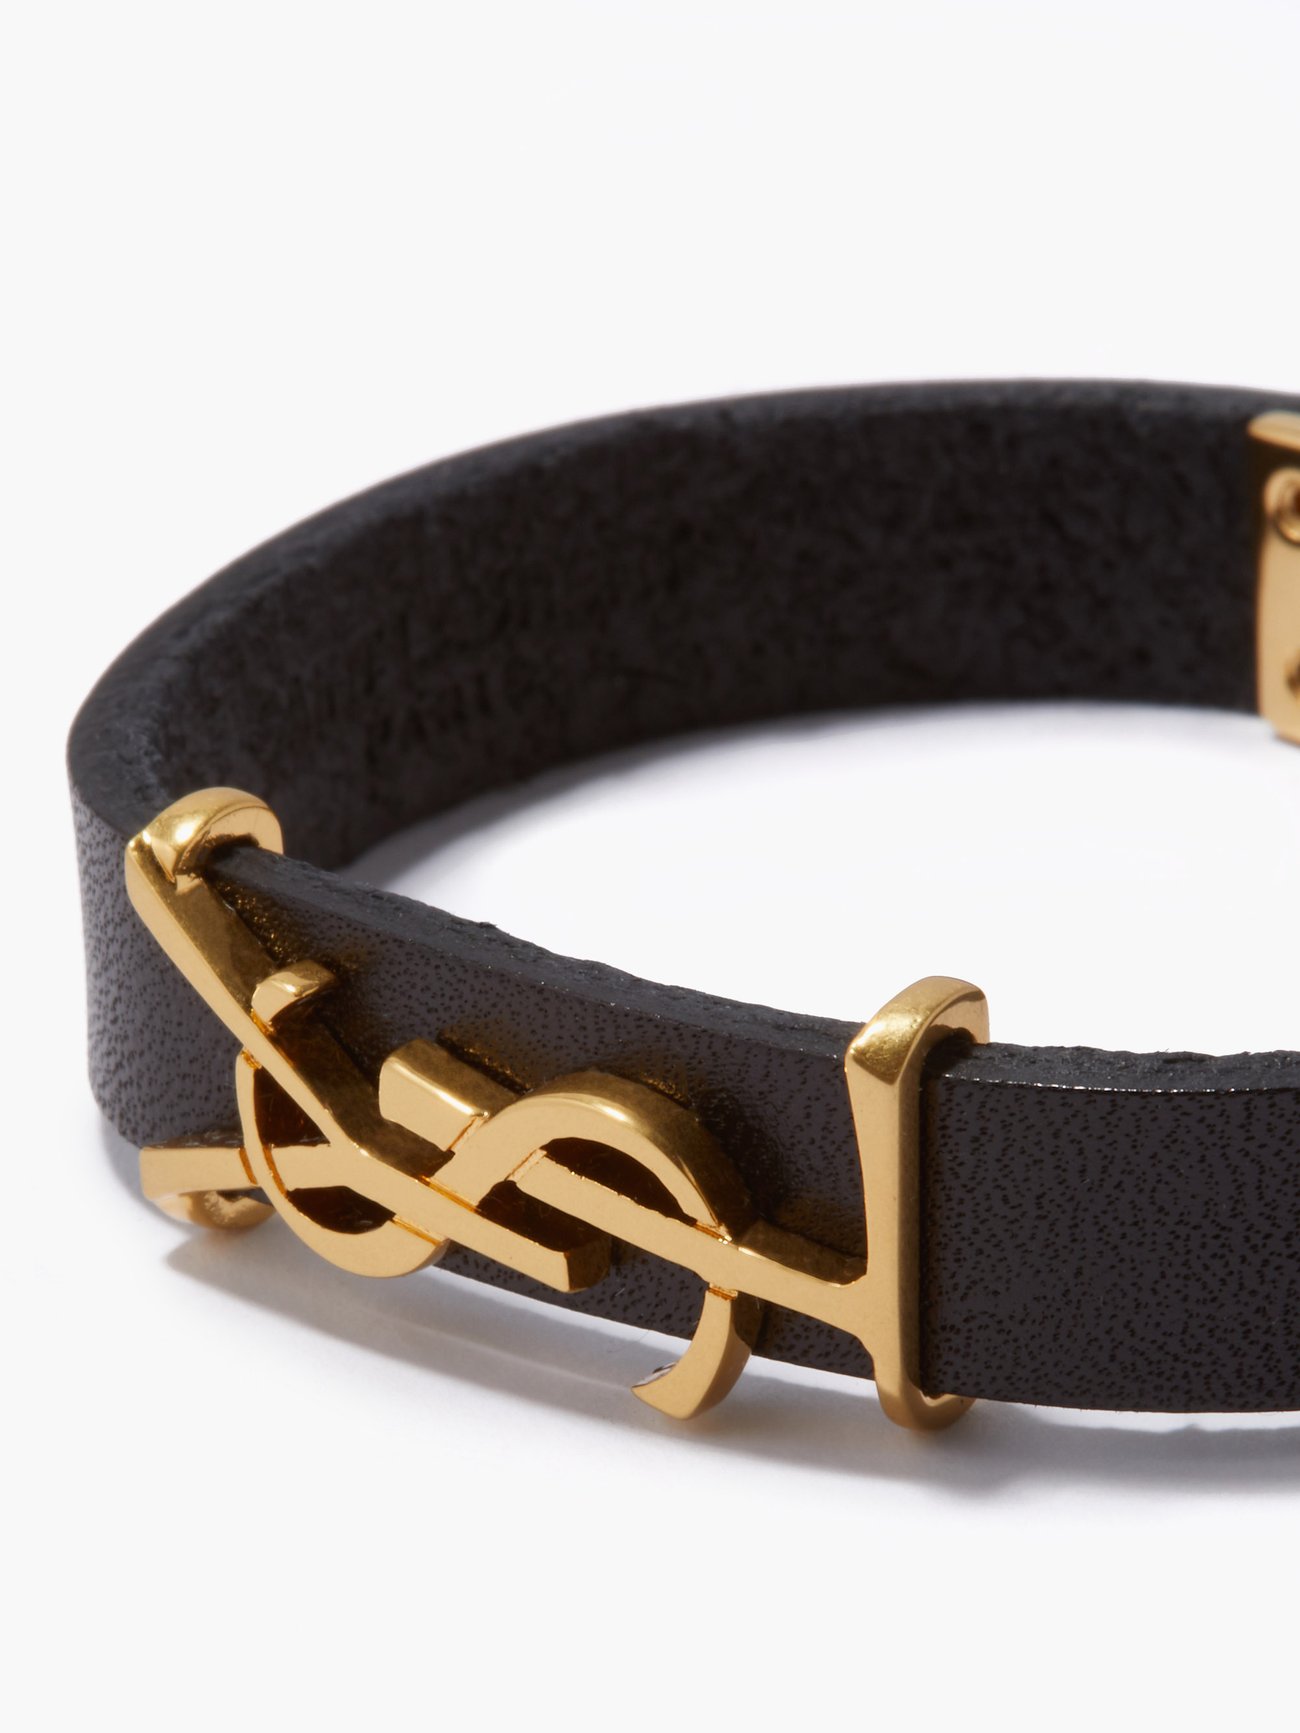 Saint Laurent Ysl Insignia Leather Bracelet in Black/Gold